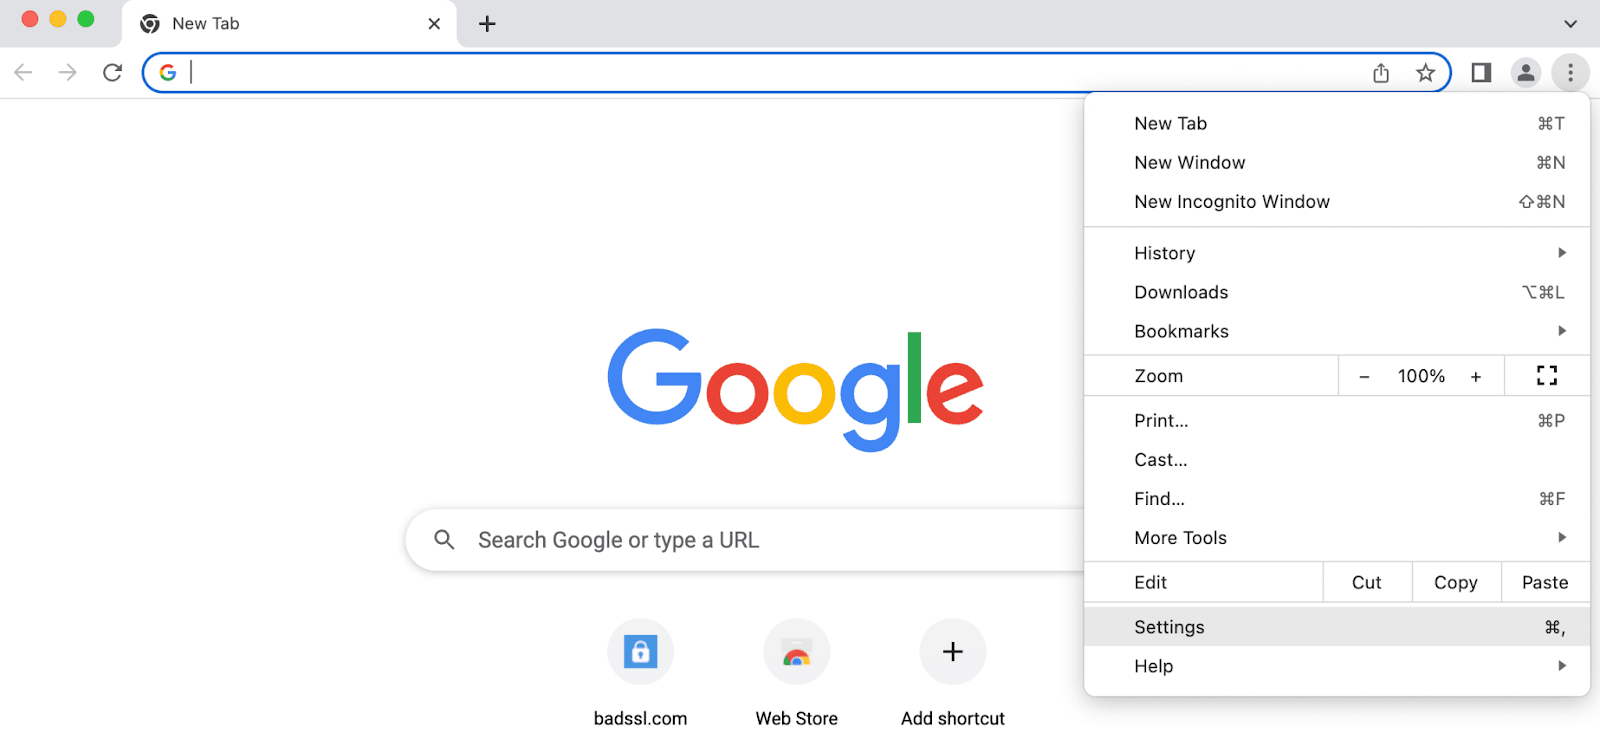 Google Chromeの設定